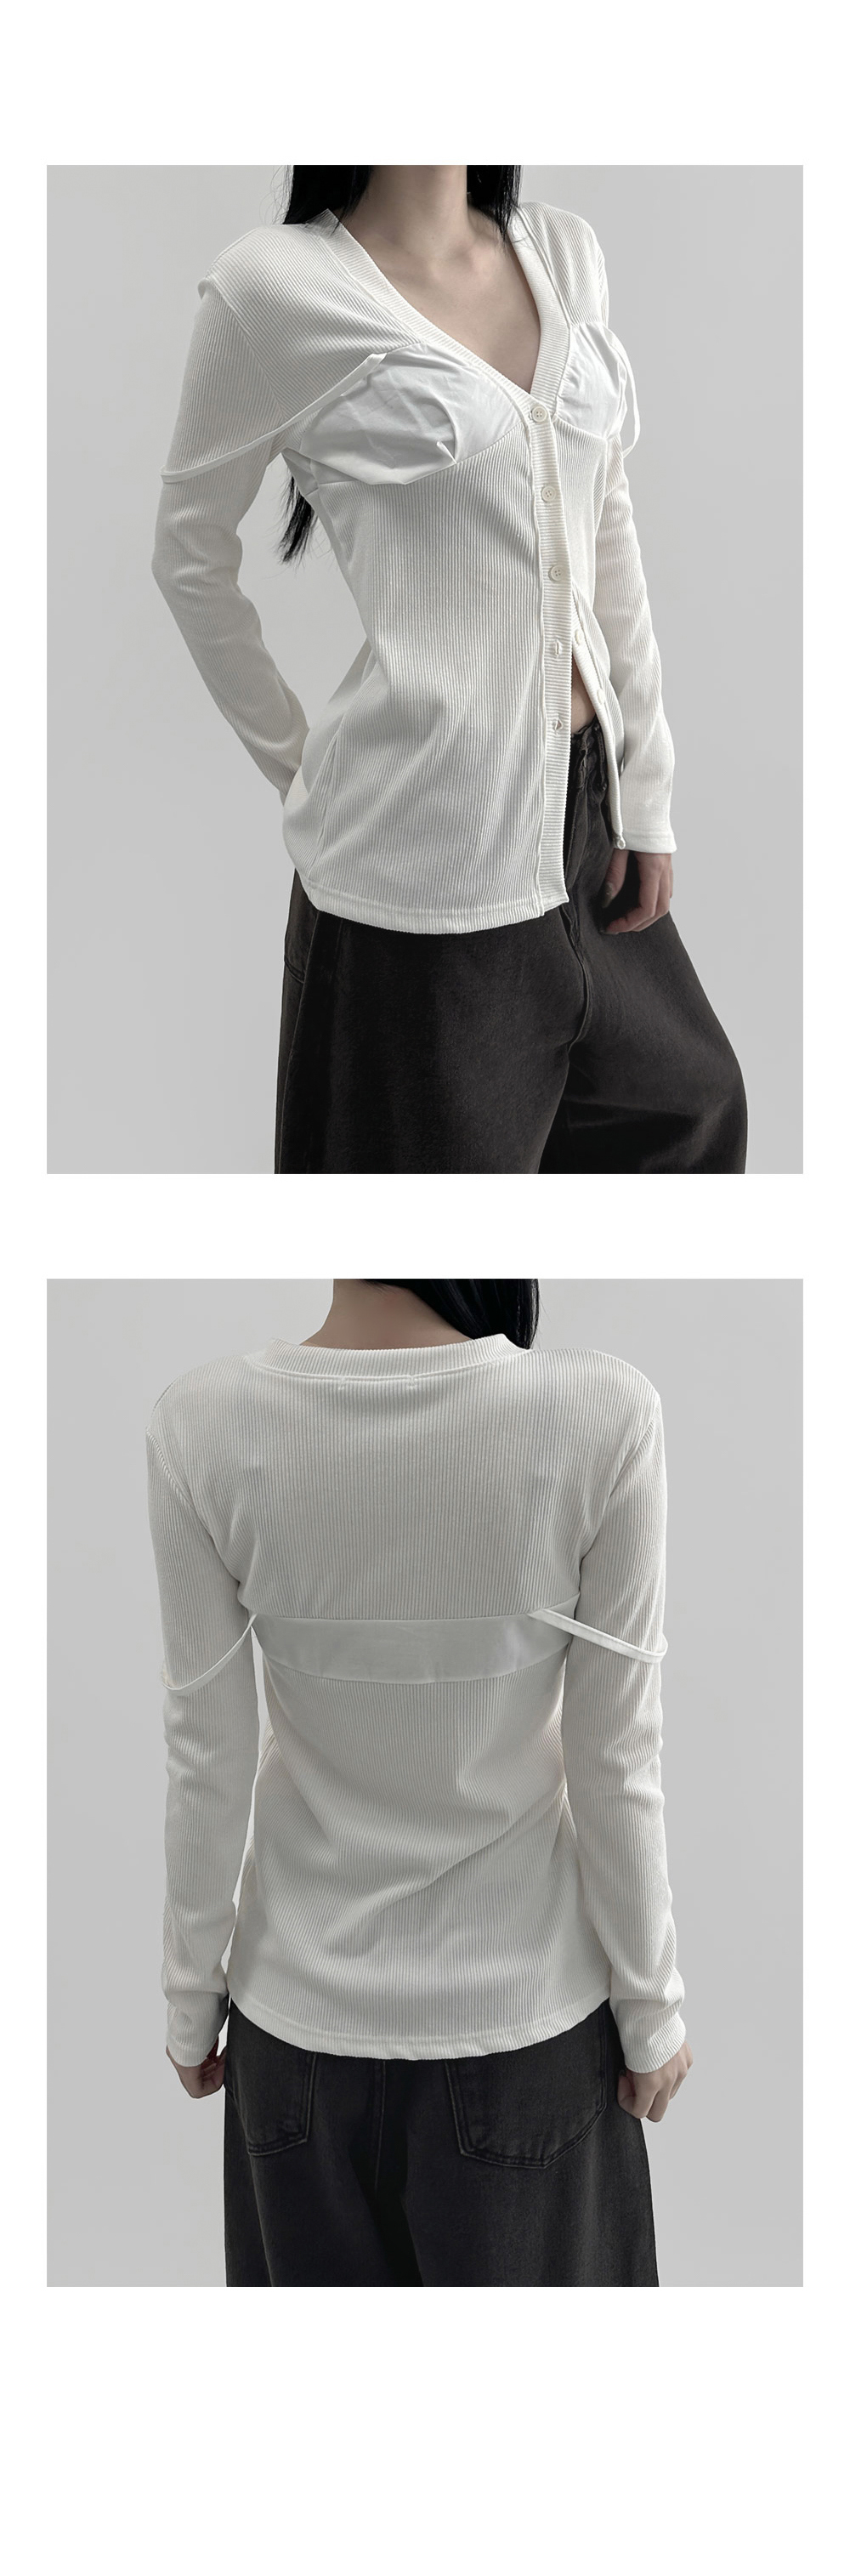 blouse model image-S2L12